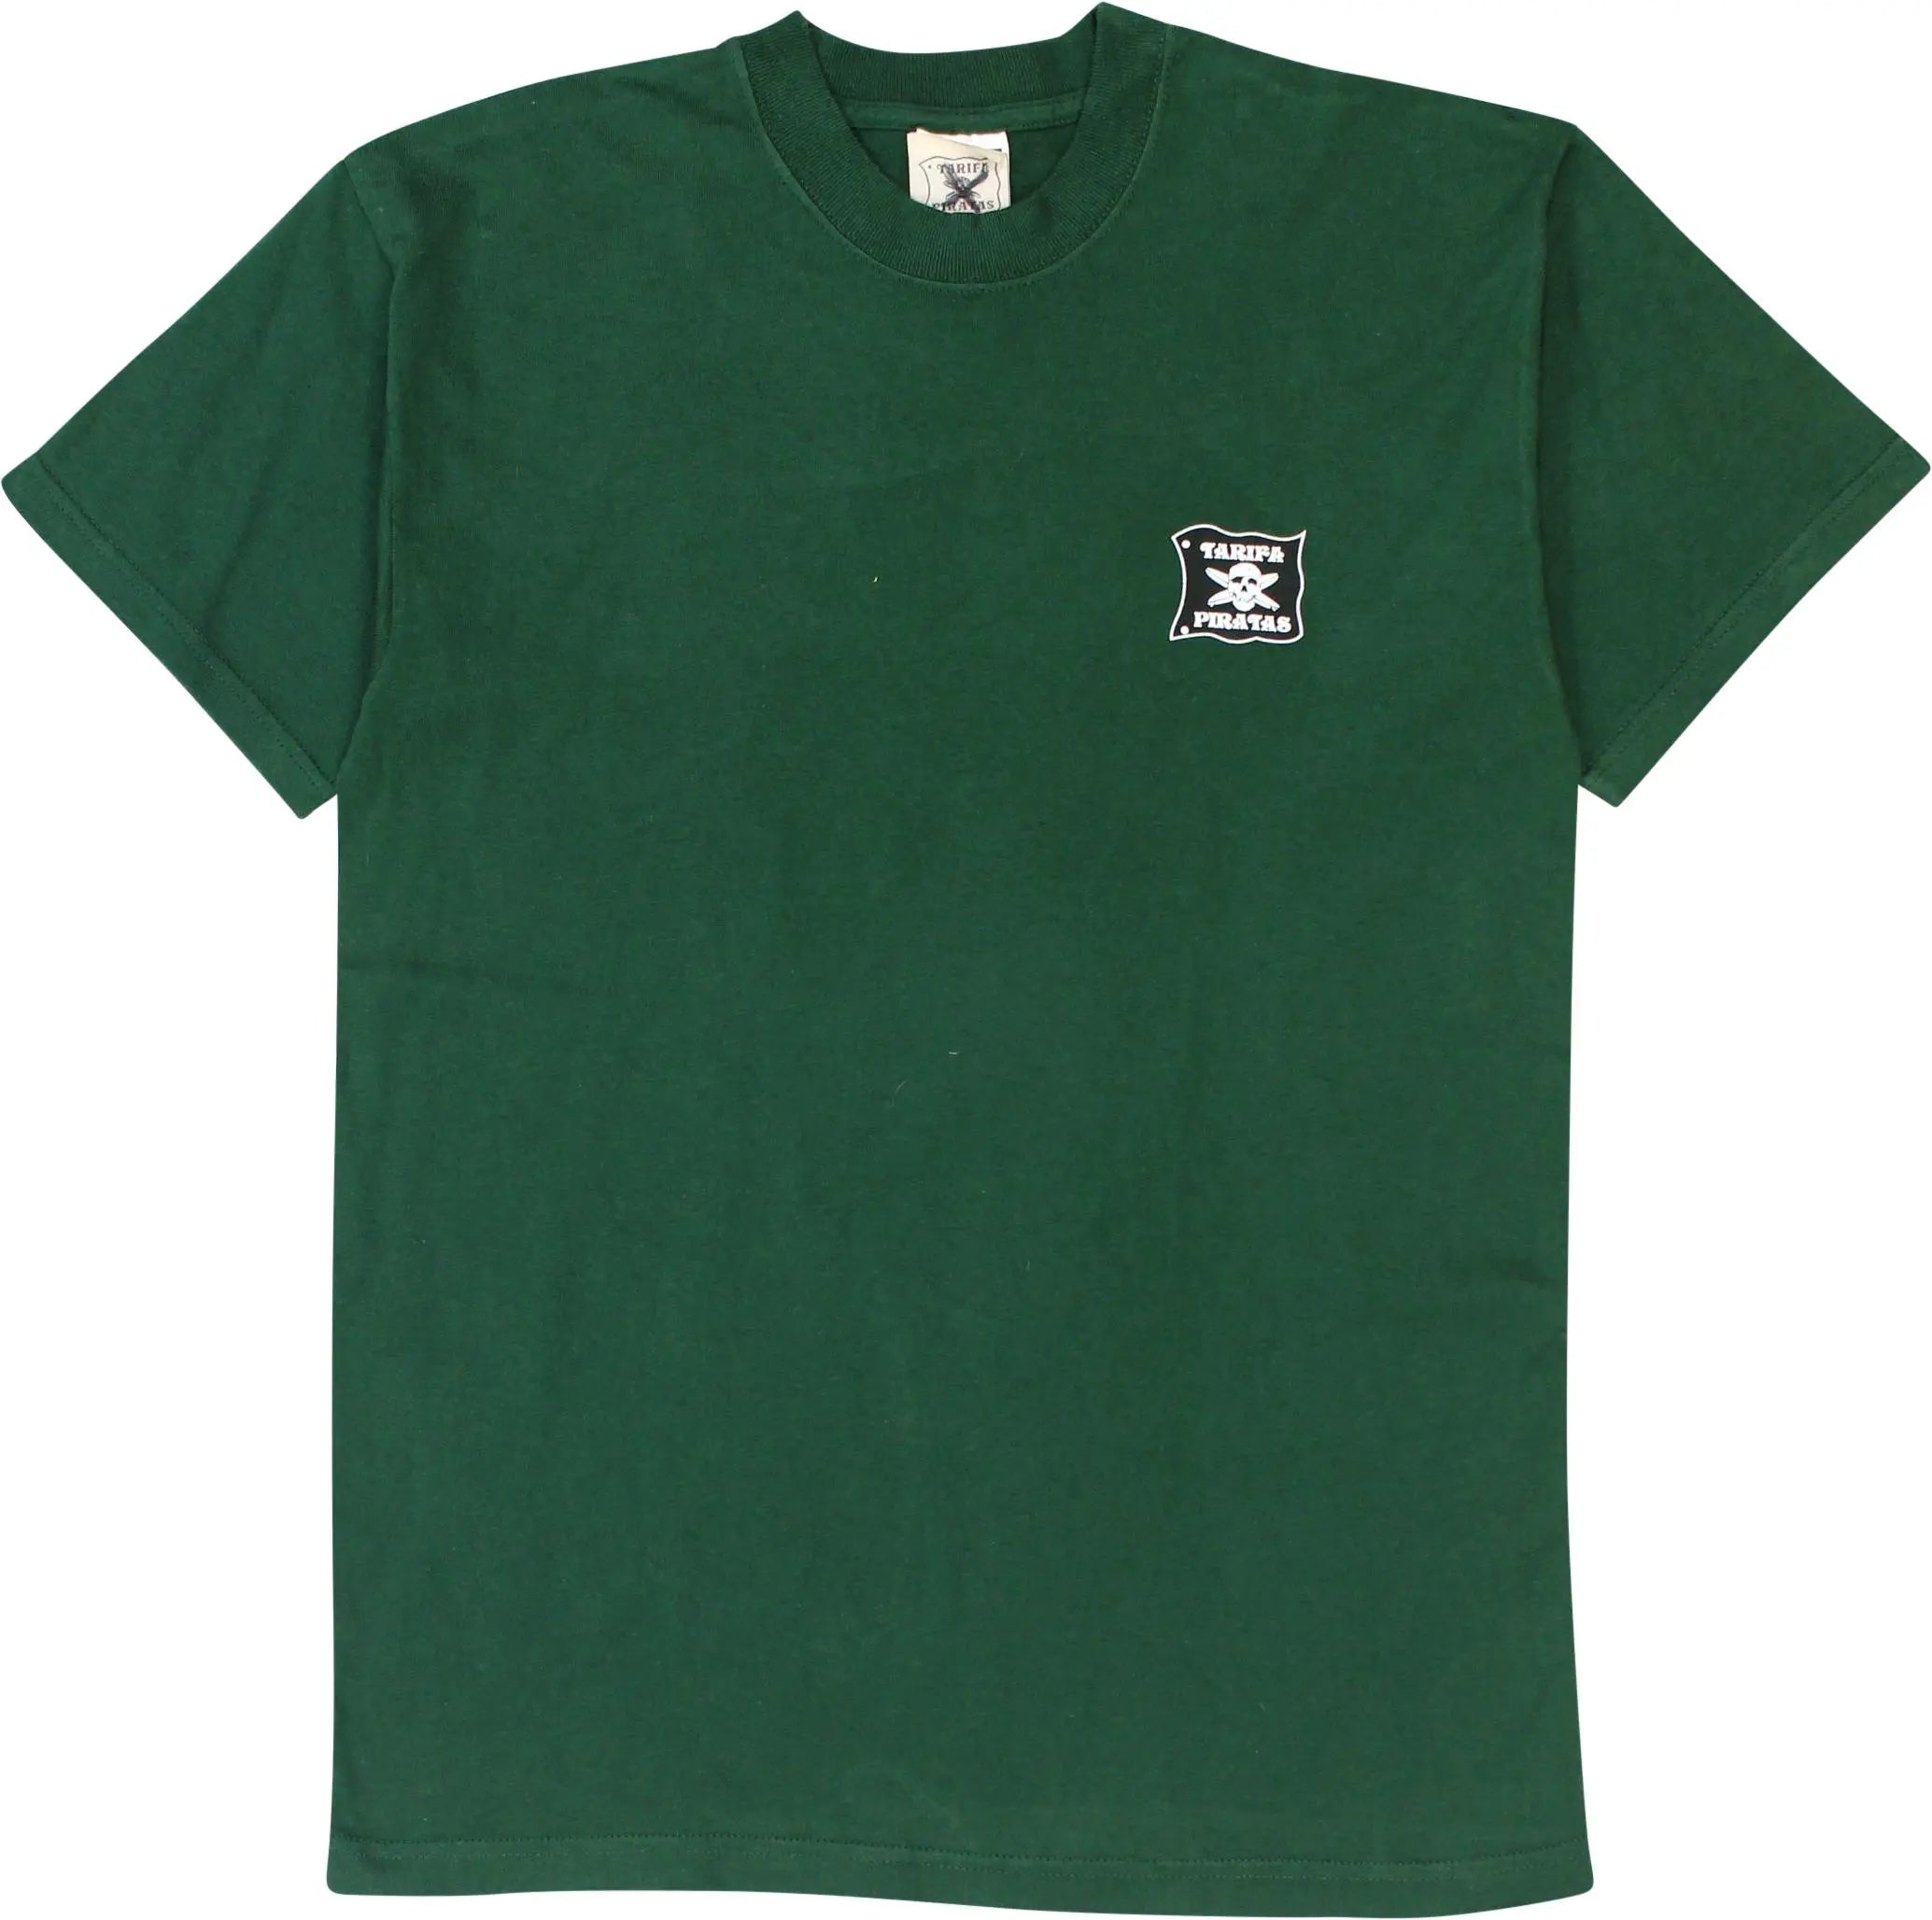 Tarifa Piratas - Merchandise T-Shirt- ThriftTale.com - Vintage and second handclothing